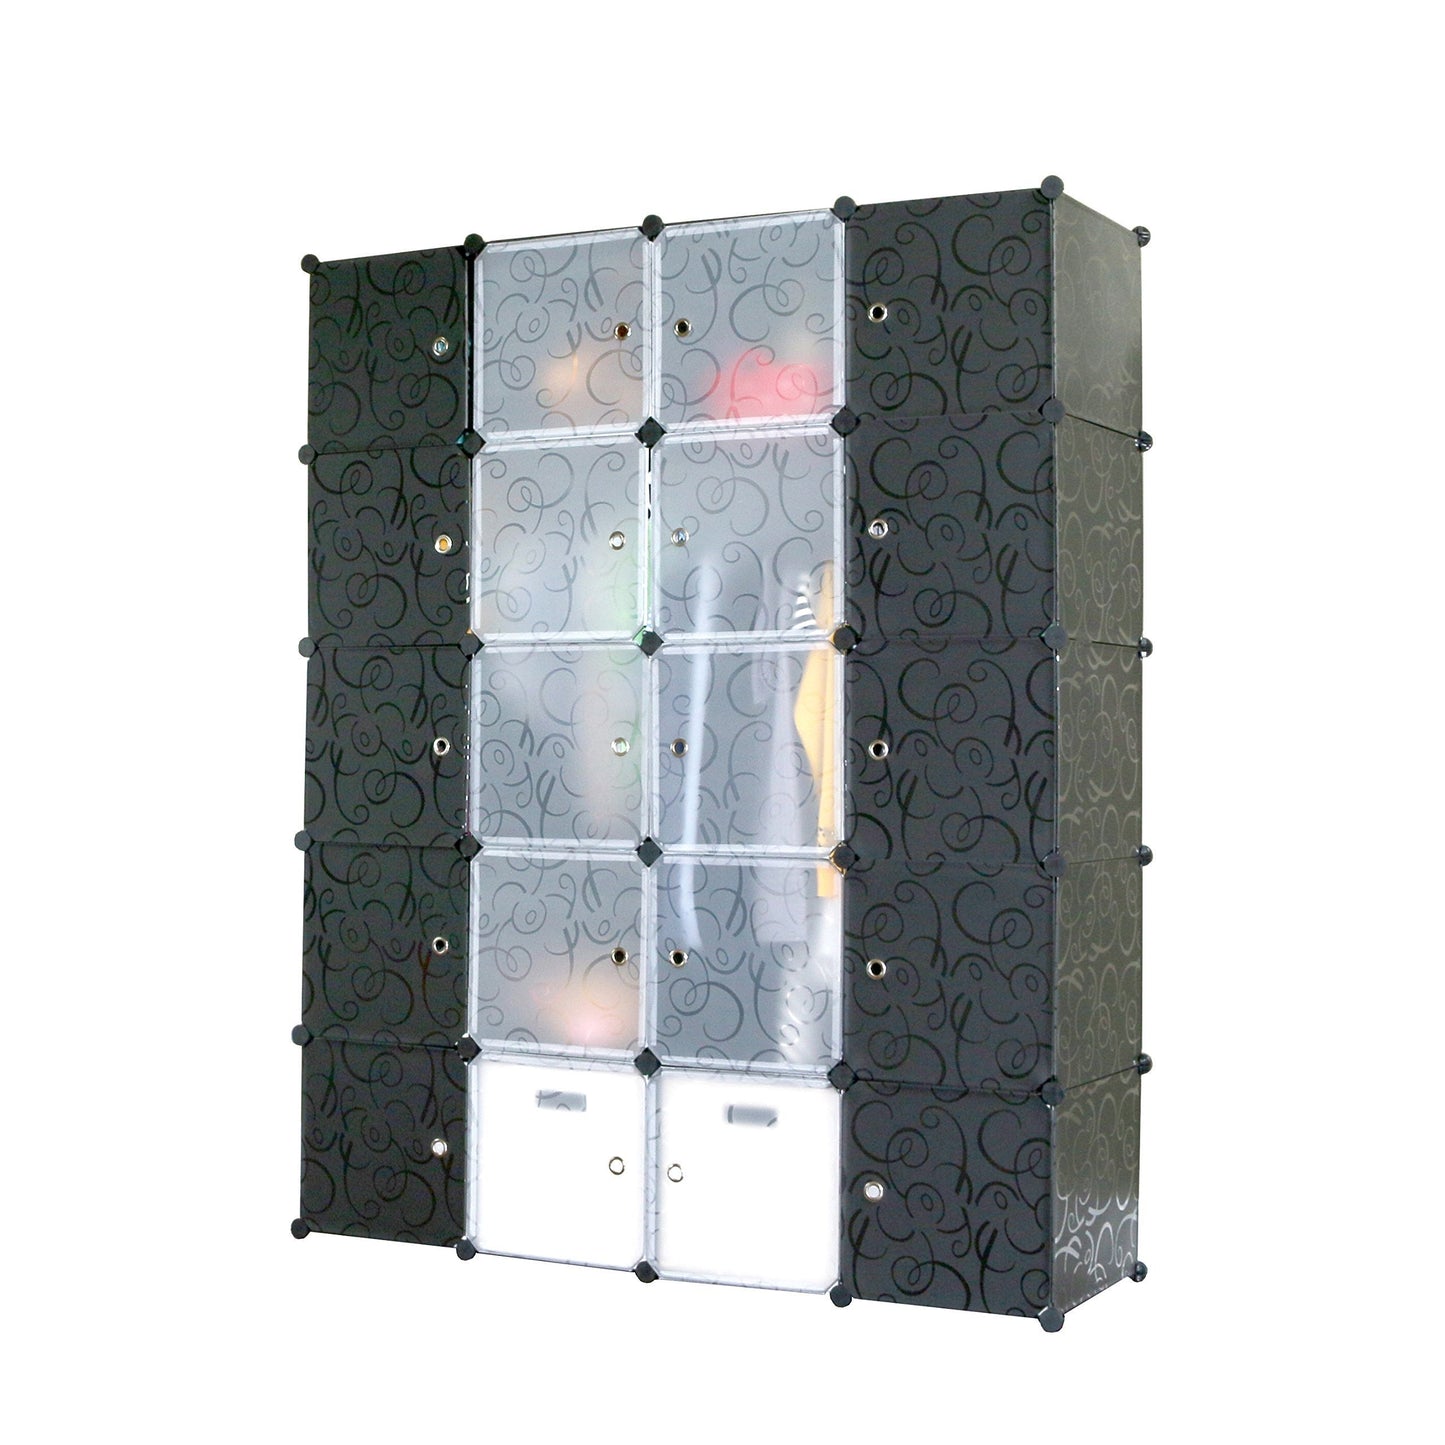 Select nice unicoo multi use diy plastic 20 cube organizer bookcase storage cabinet wardrobe closet black with black white door deeper cube